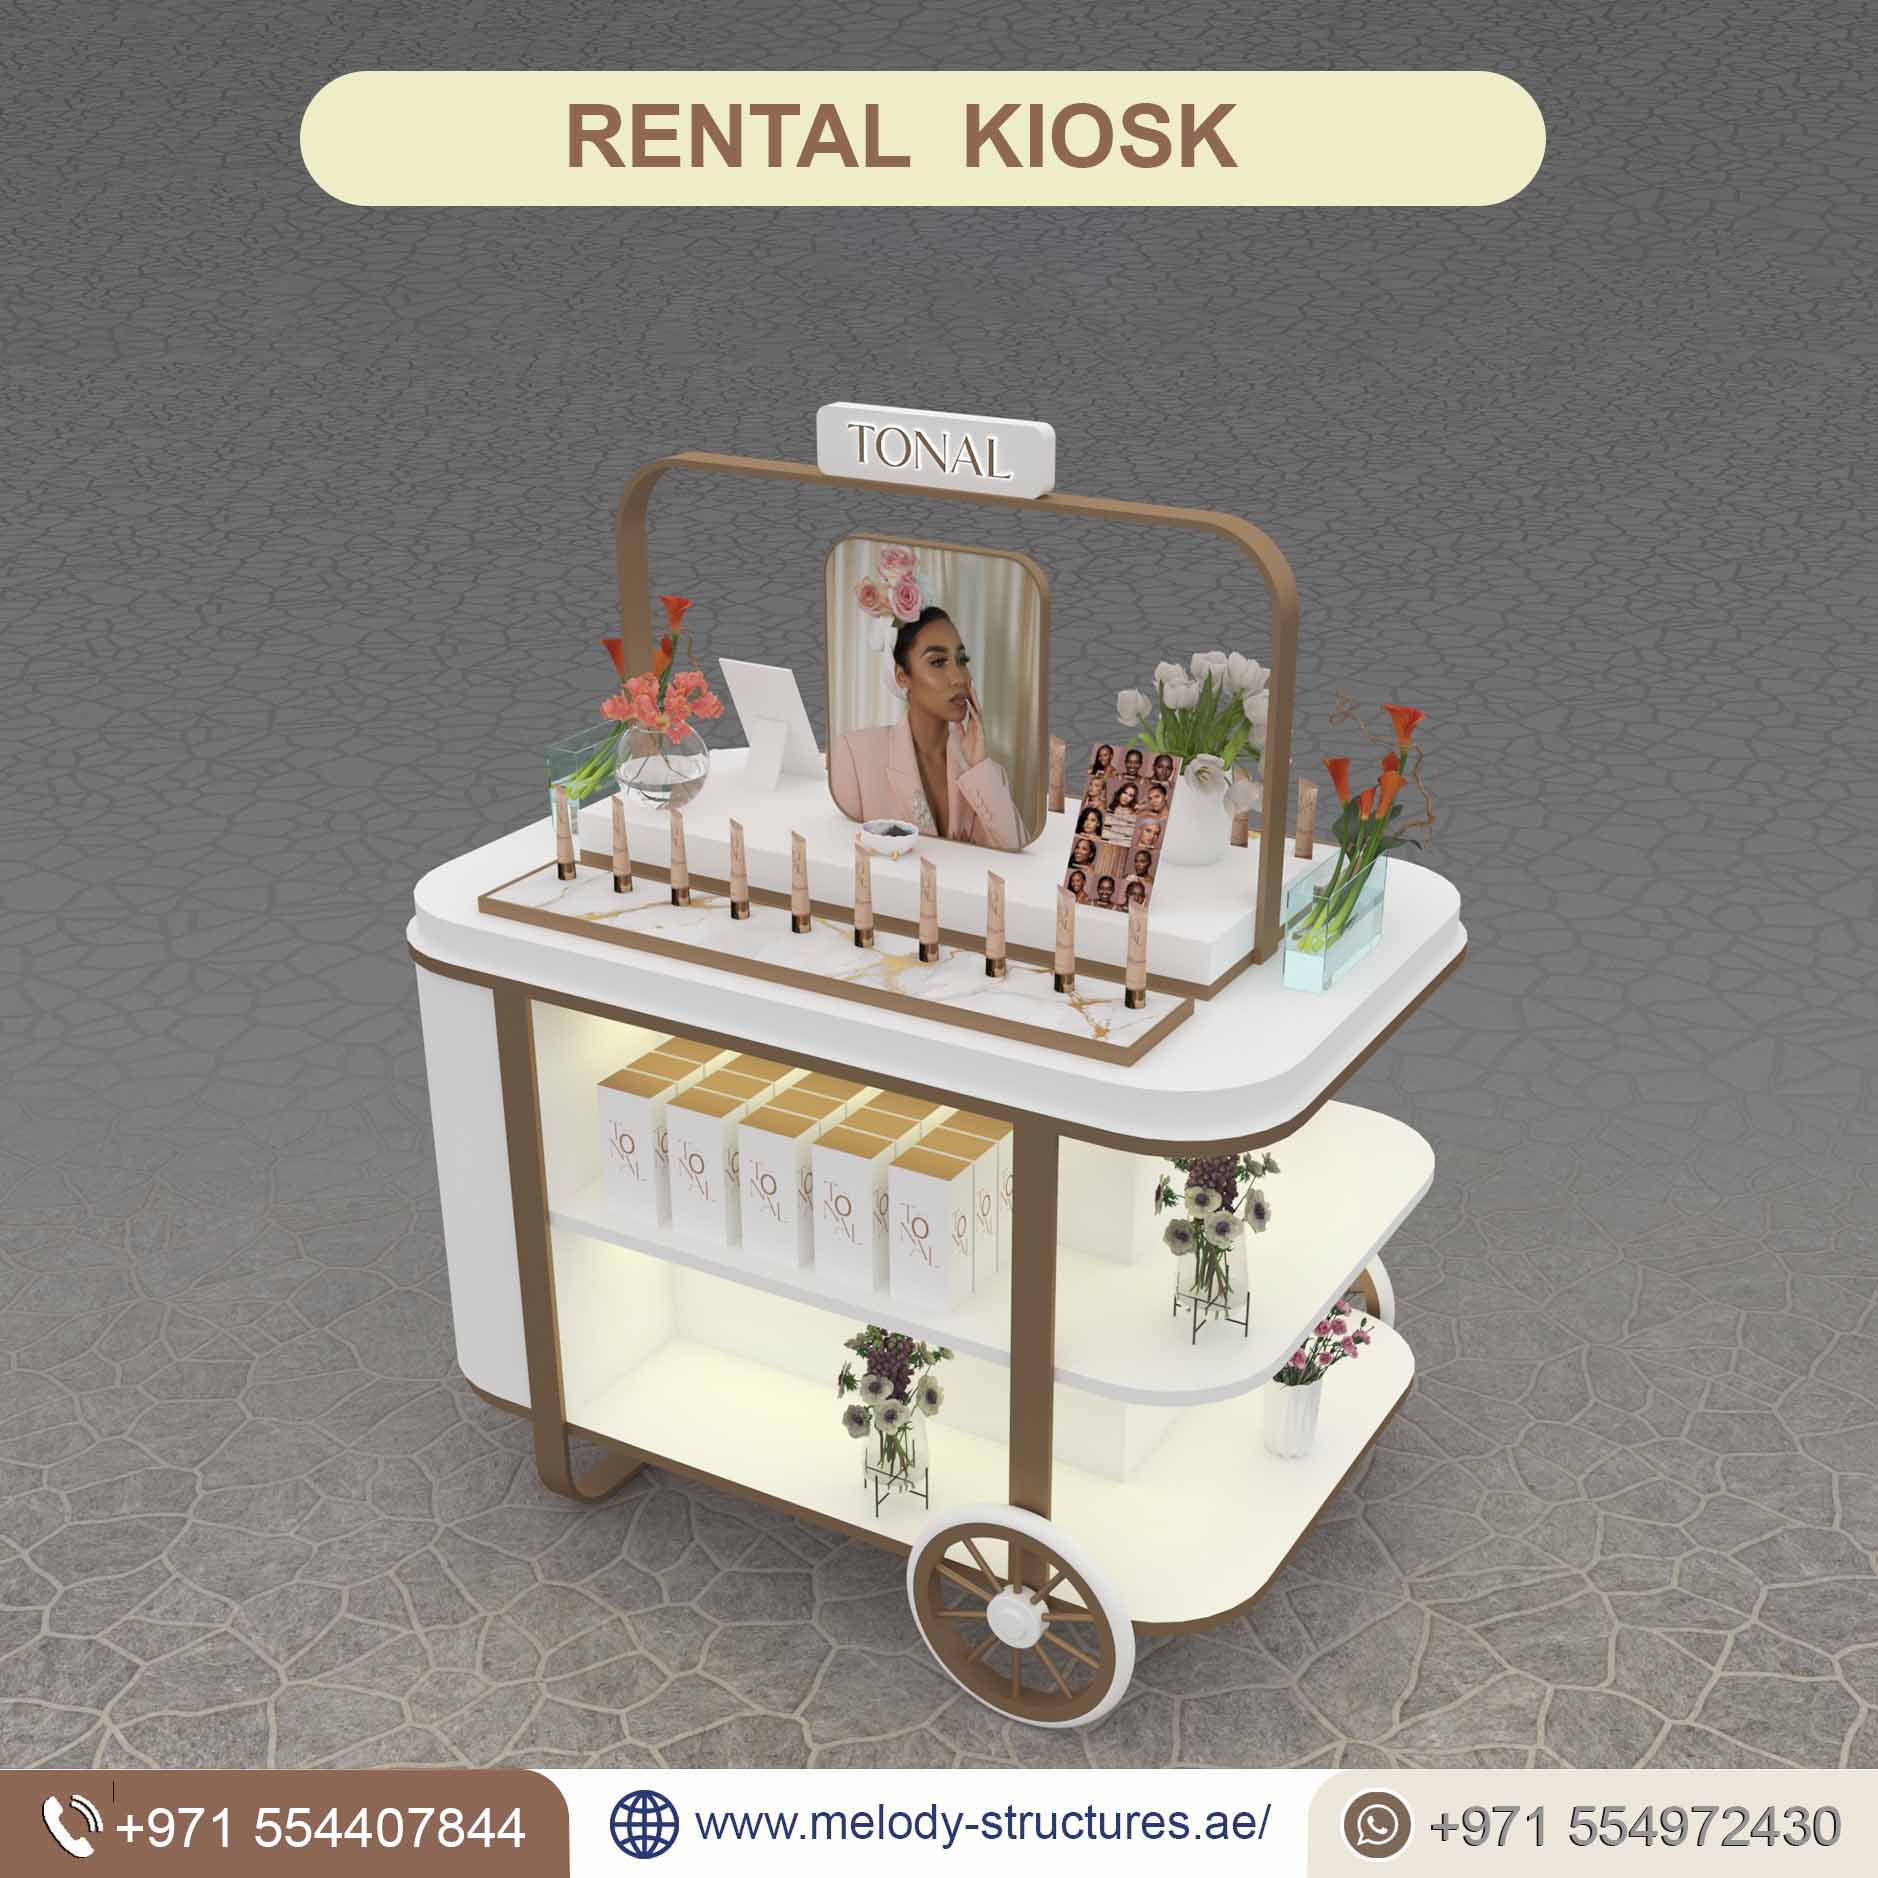 Retail-Kiosk-On-Rent-rental-Kiosk-in-UAE-Free-Delivery (3).jpg